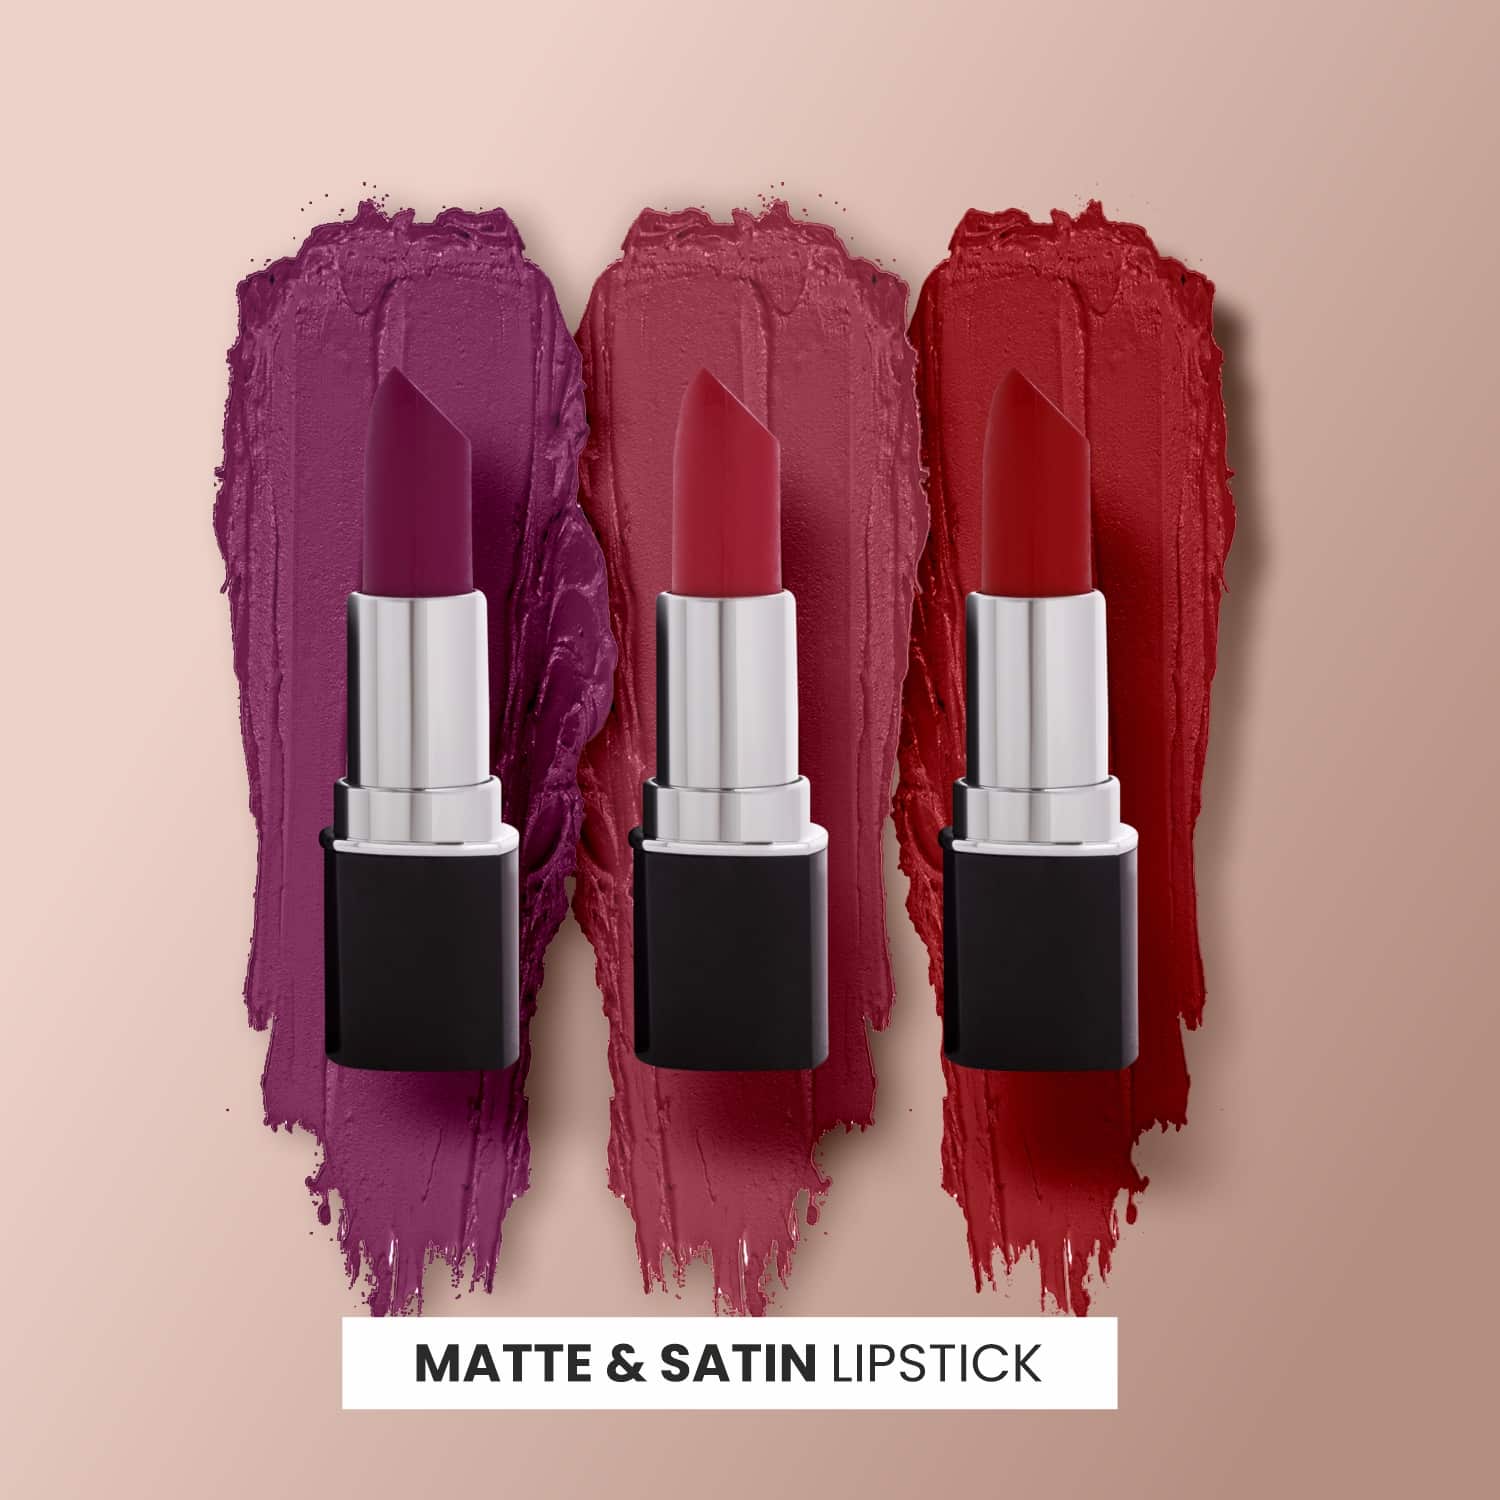 Matte & Satin Lipstick - M11 Marooned